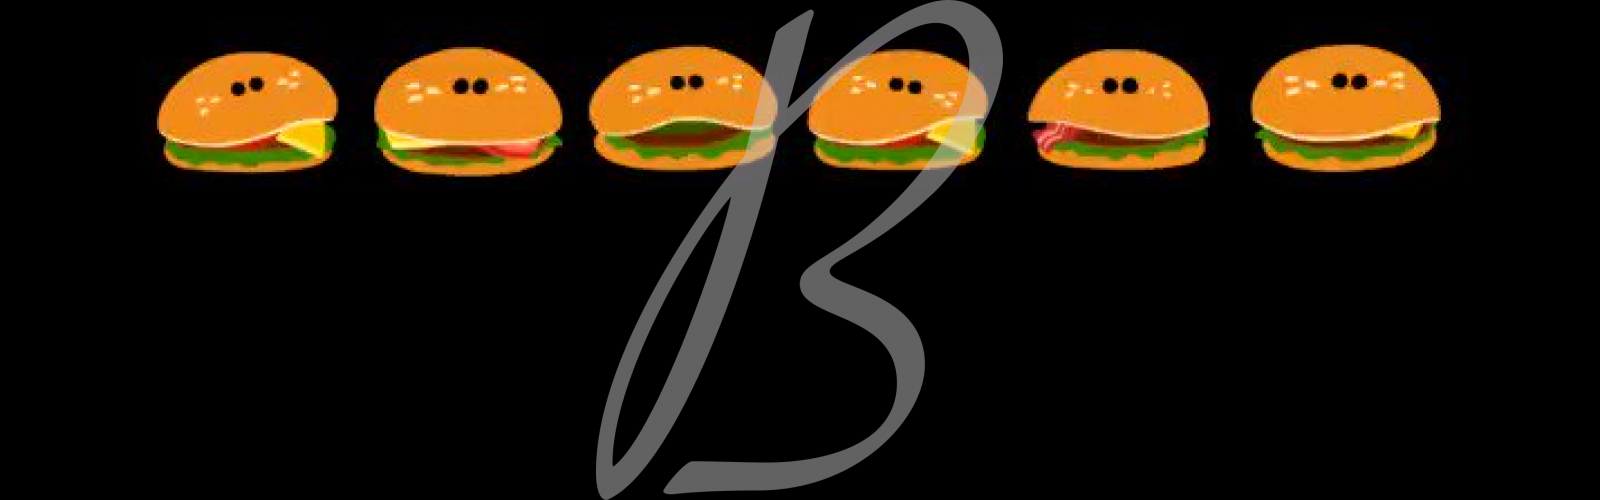 visio-burger-party